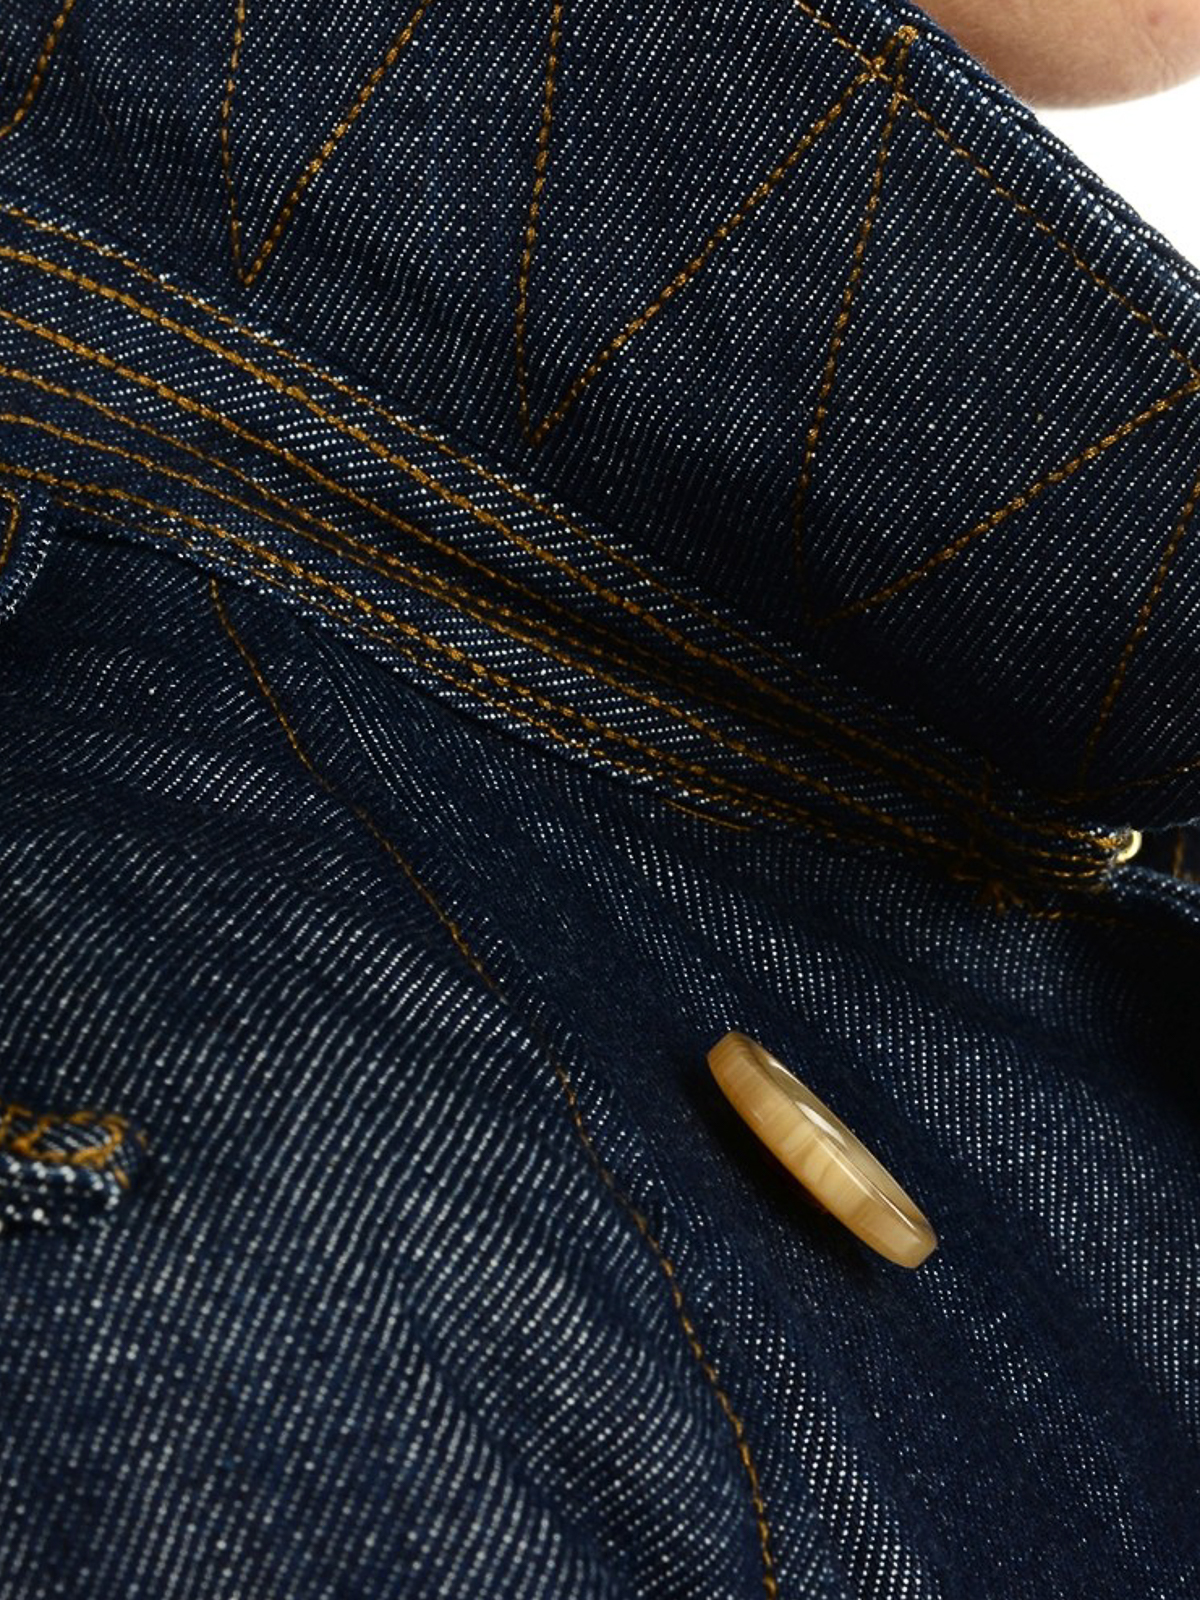 burberry jeans mens 2013